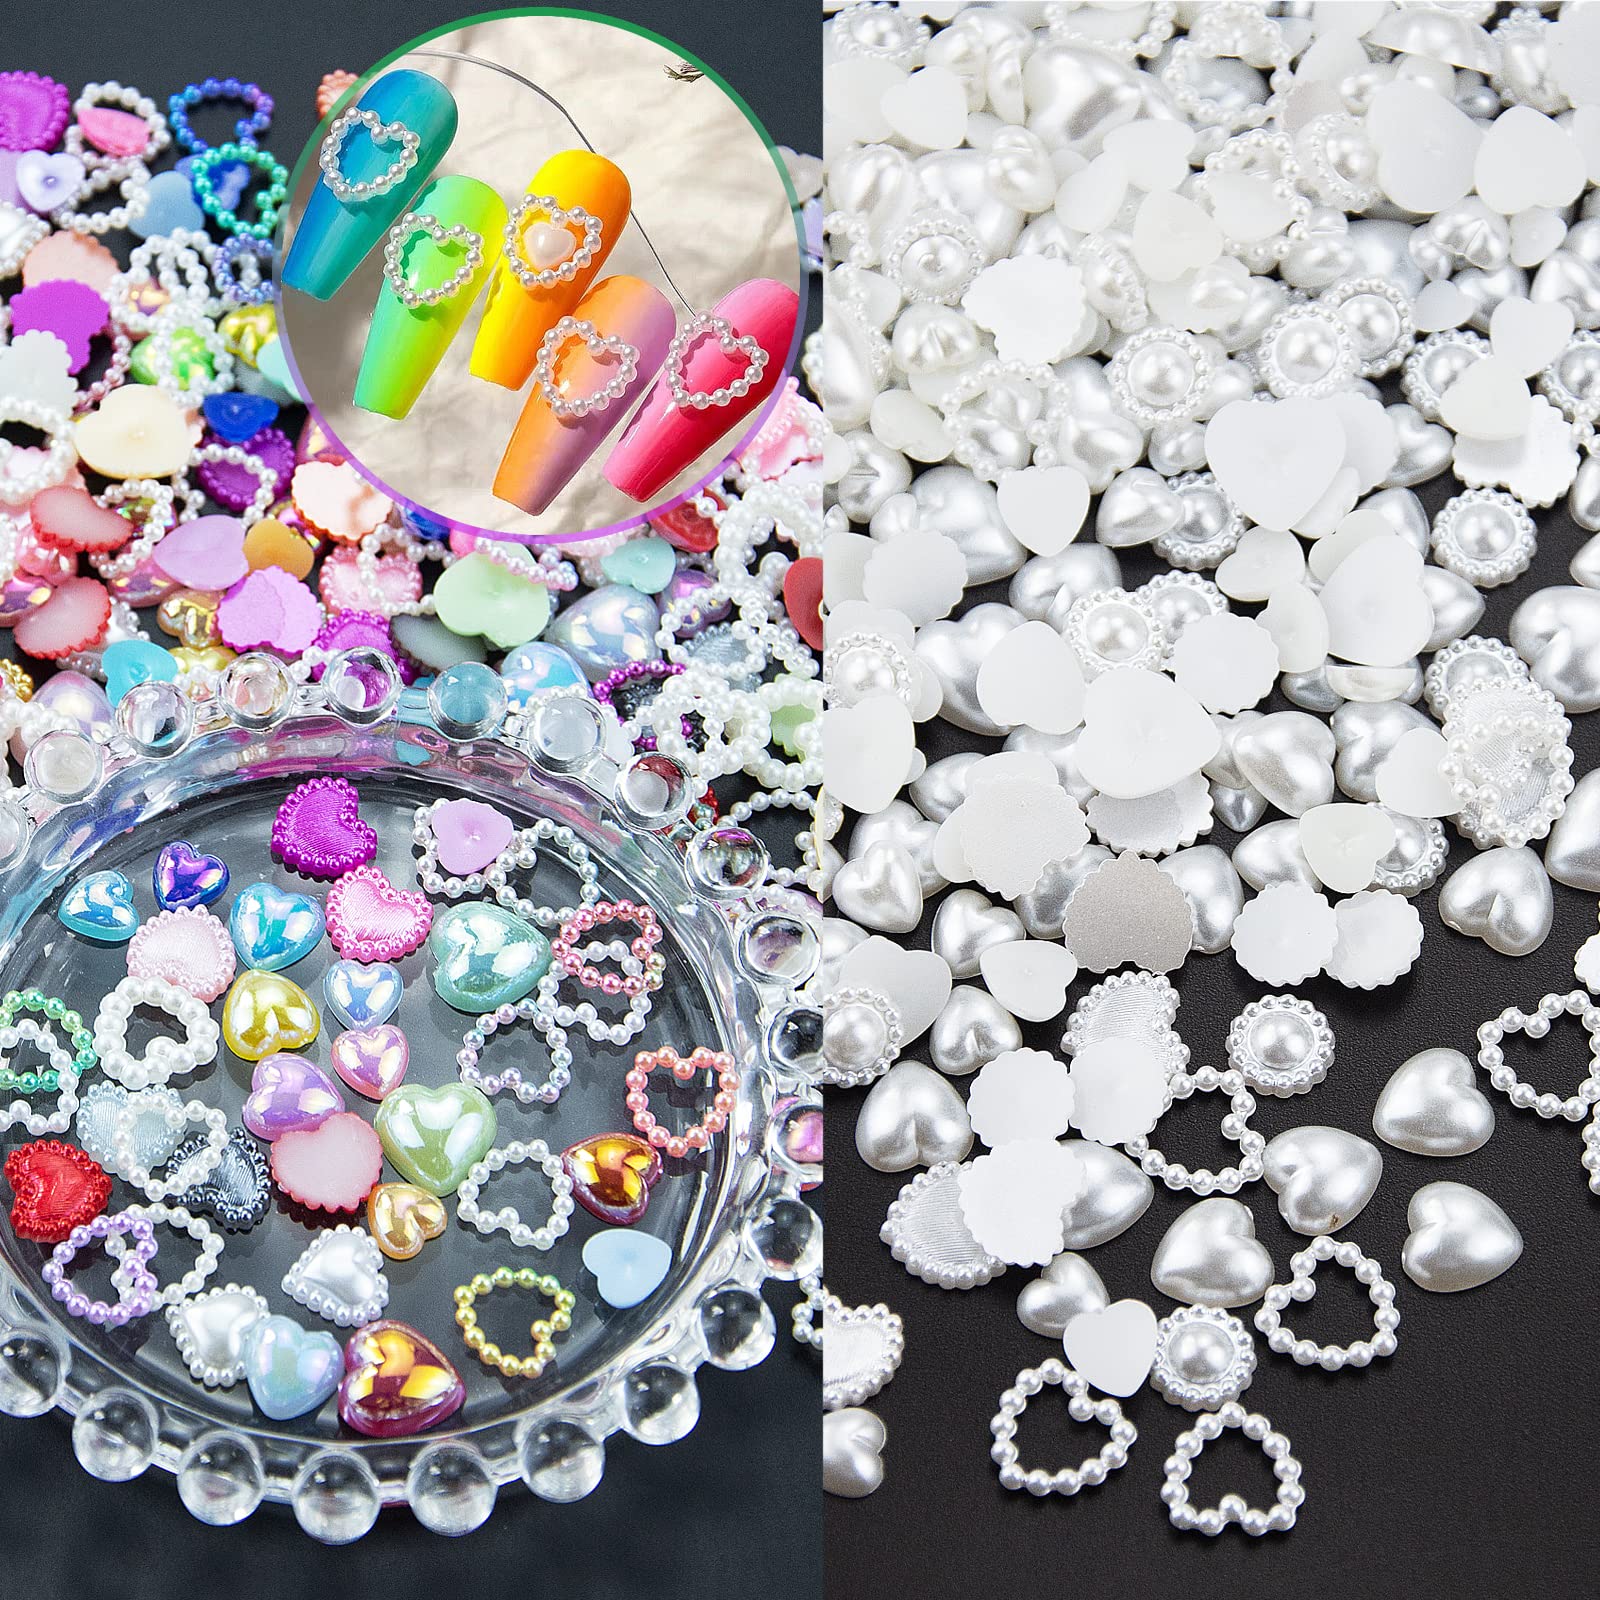 Mixed Hollo Pearls Nail Charms Half Round Pearl Decorations Heart